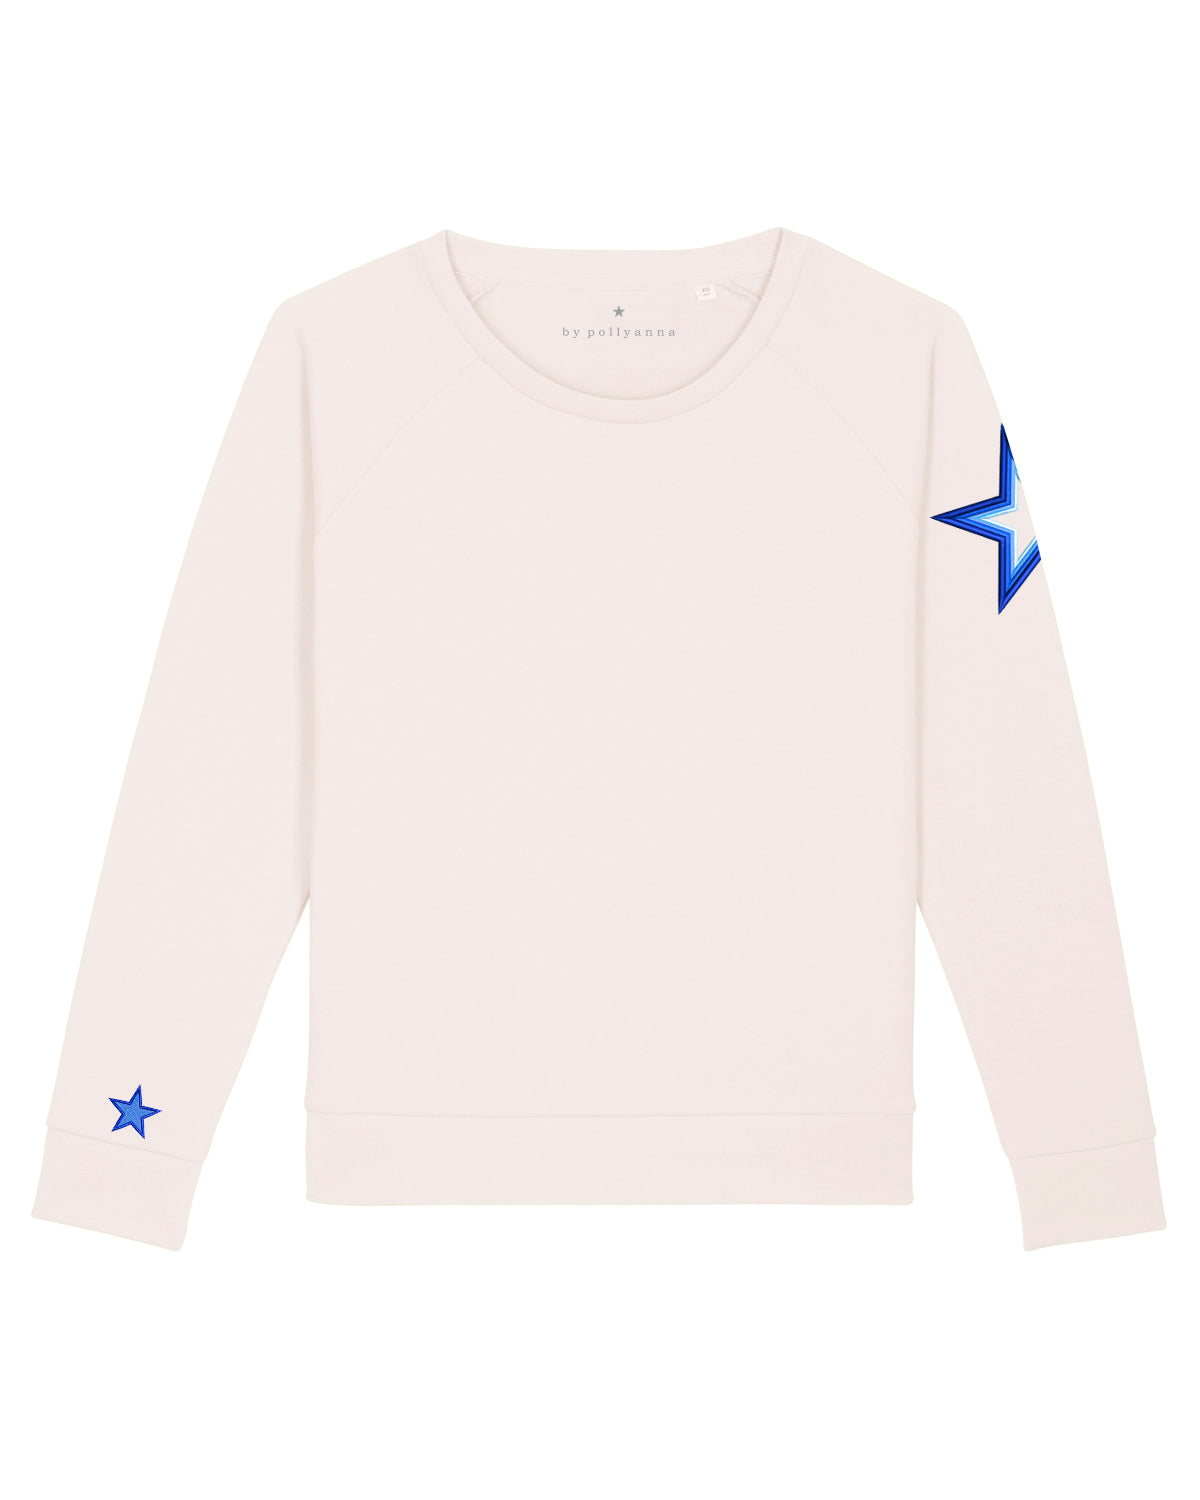 Arm Star Sweatshirt - MADE TO ORDER